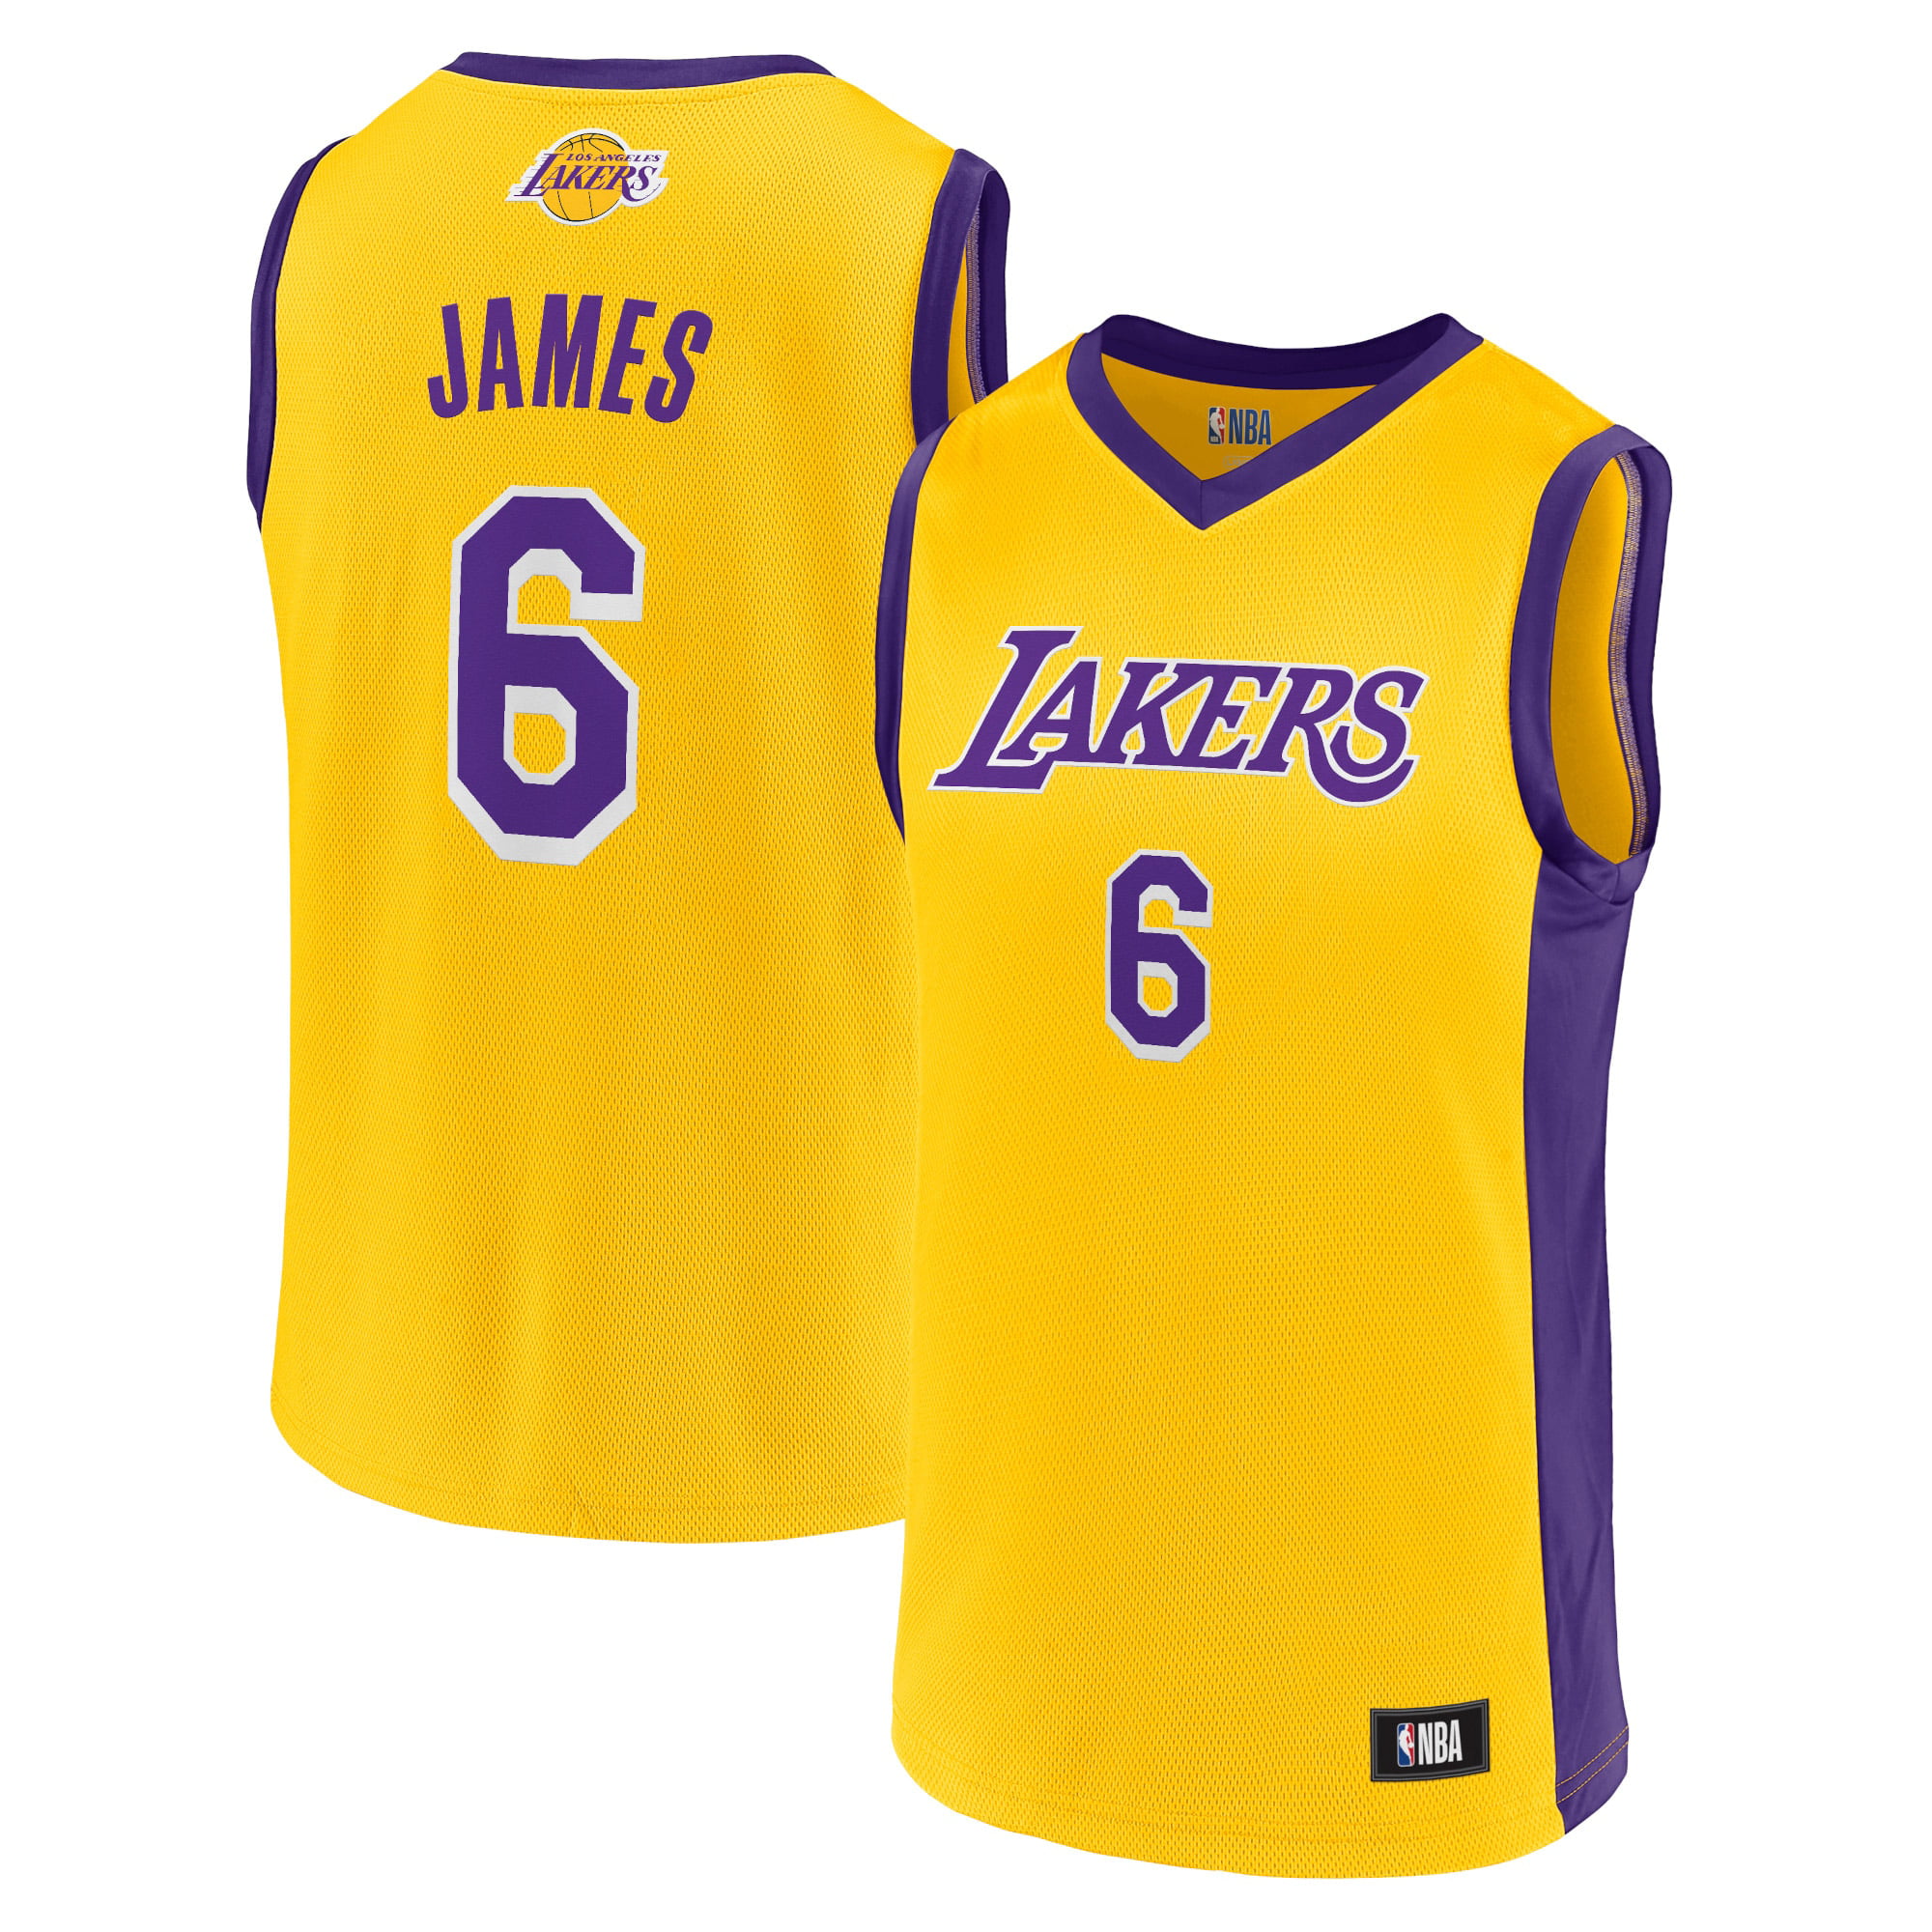 LeBron James Jerseys, LeBron James Shirt, NBA LeBron James Gear